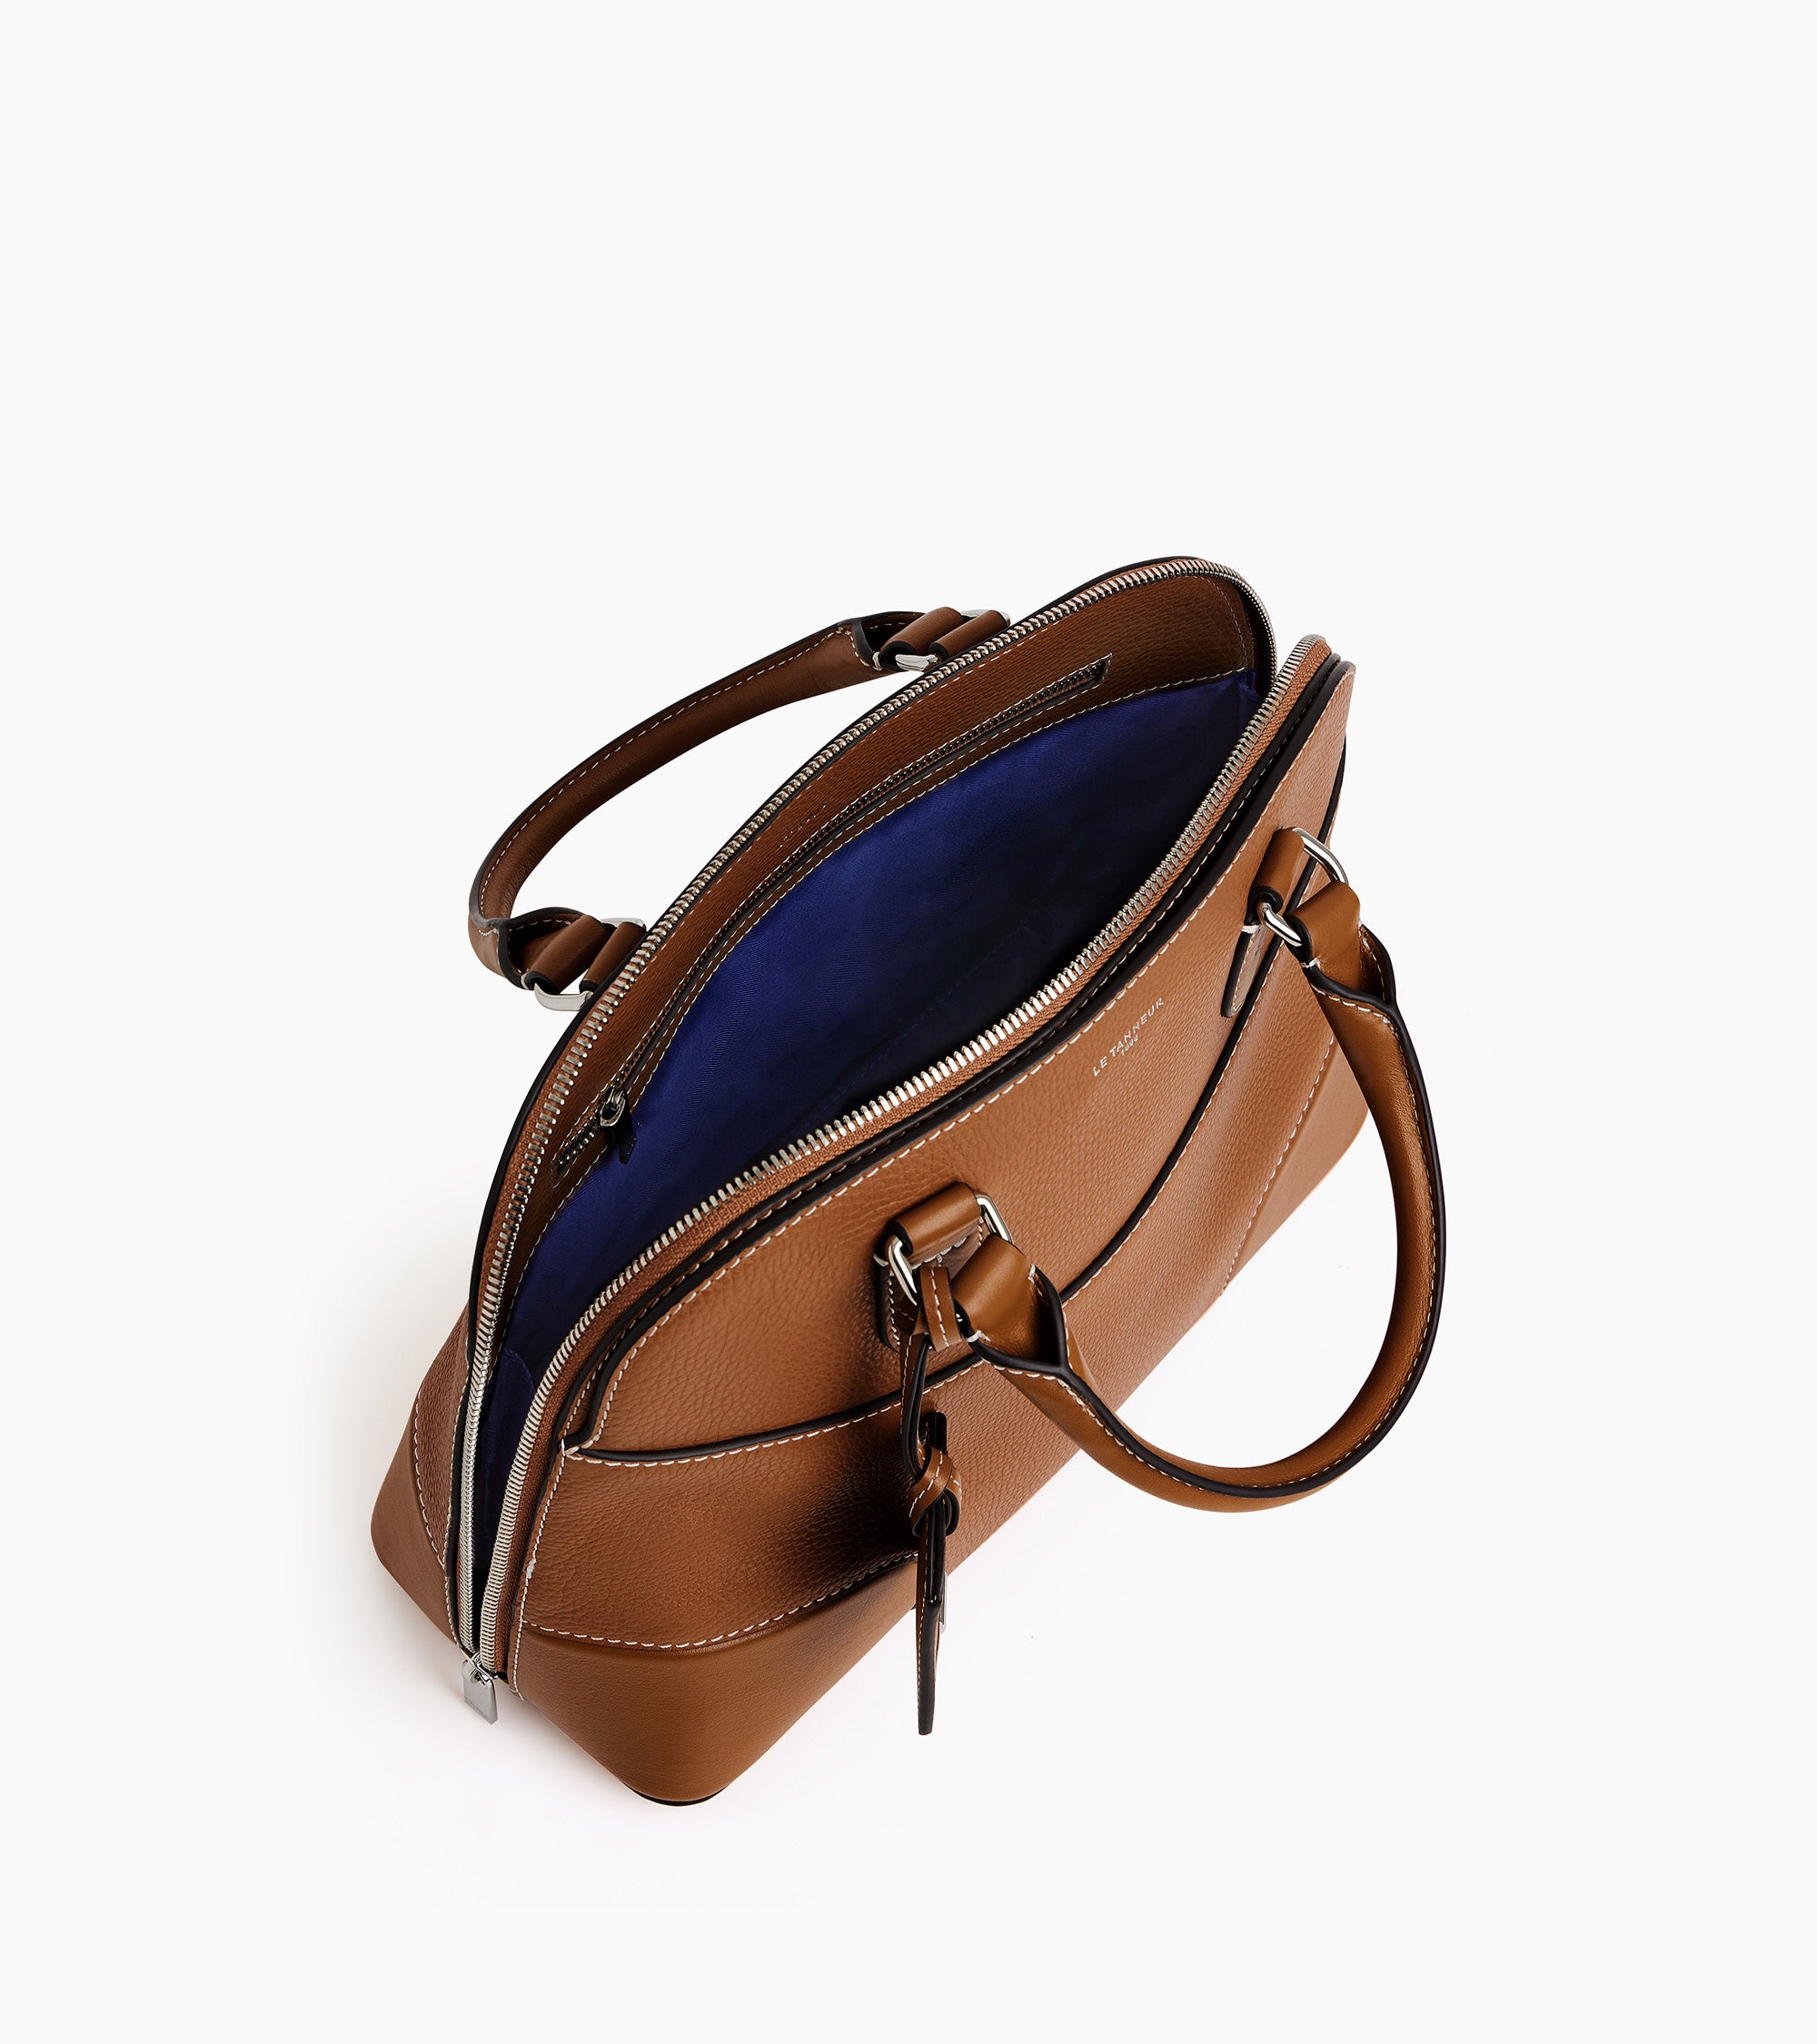 Romy medium smooth grained leather handbag